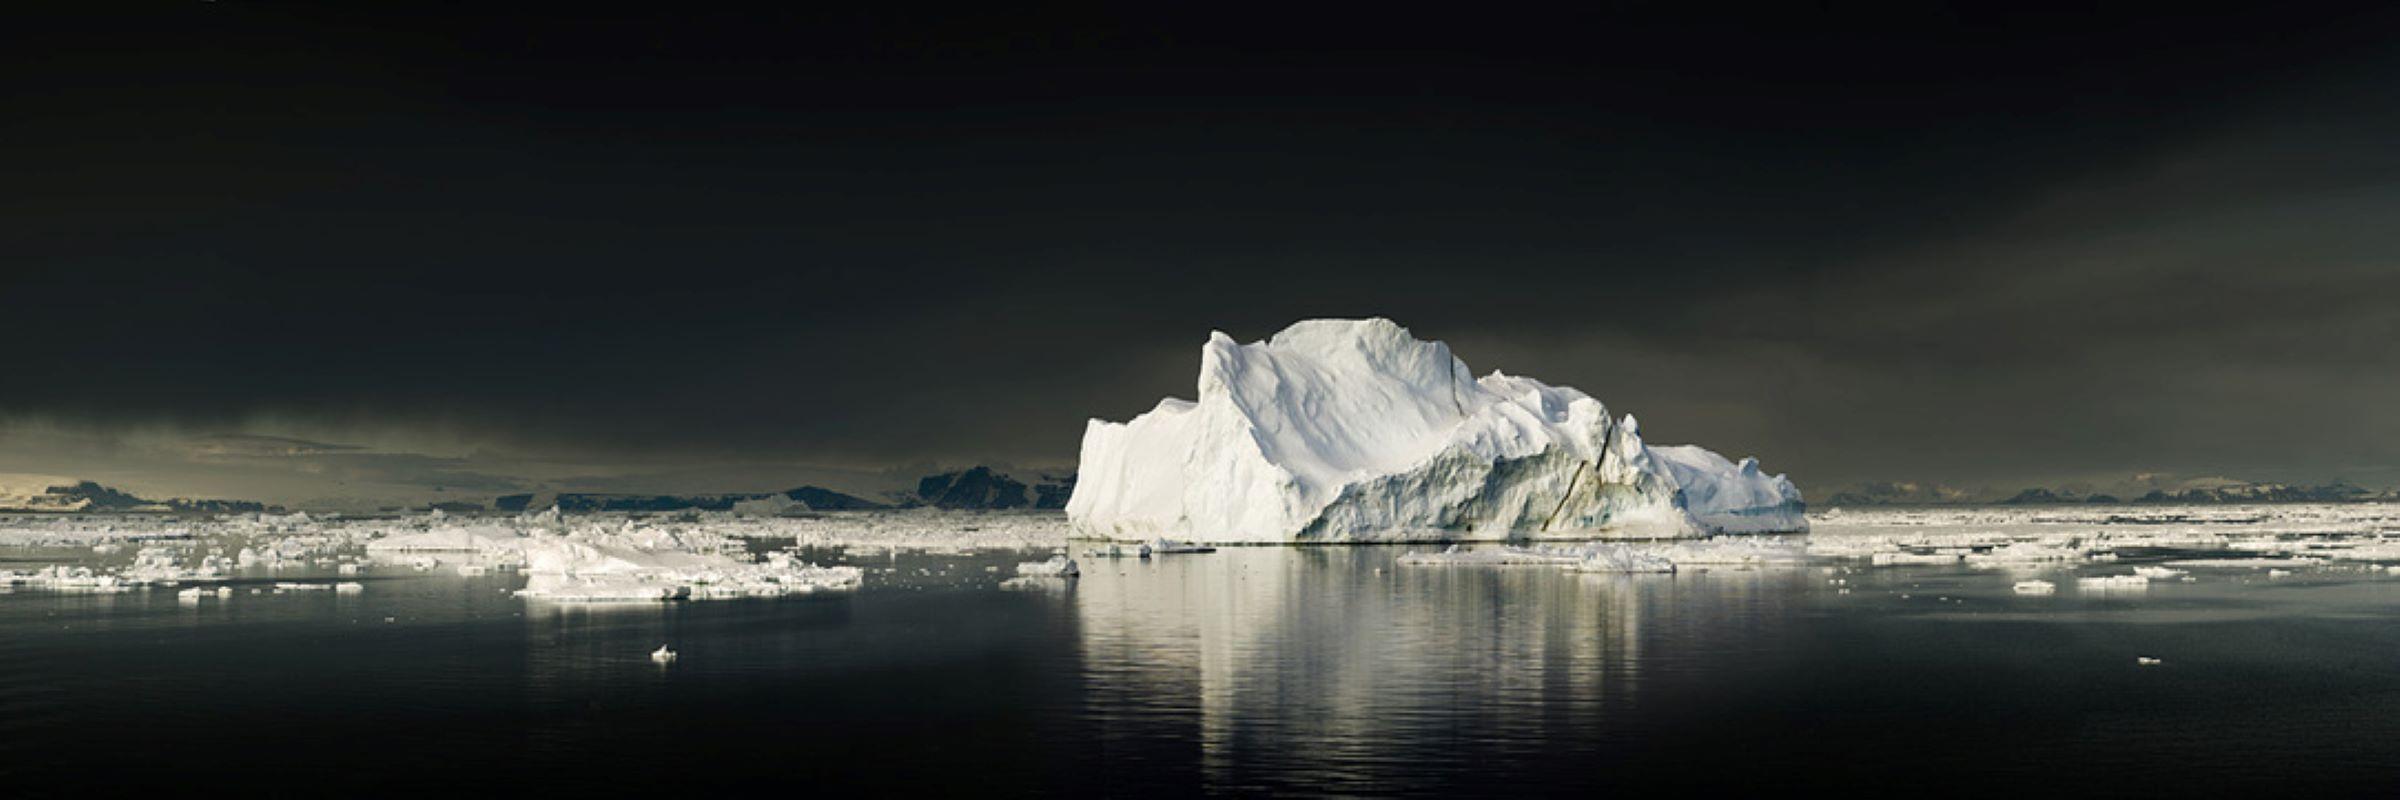 David Burdeny – Weddell Sea Entrance, Antarctica, 2020, Druck nach